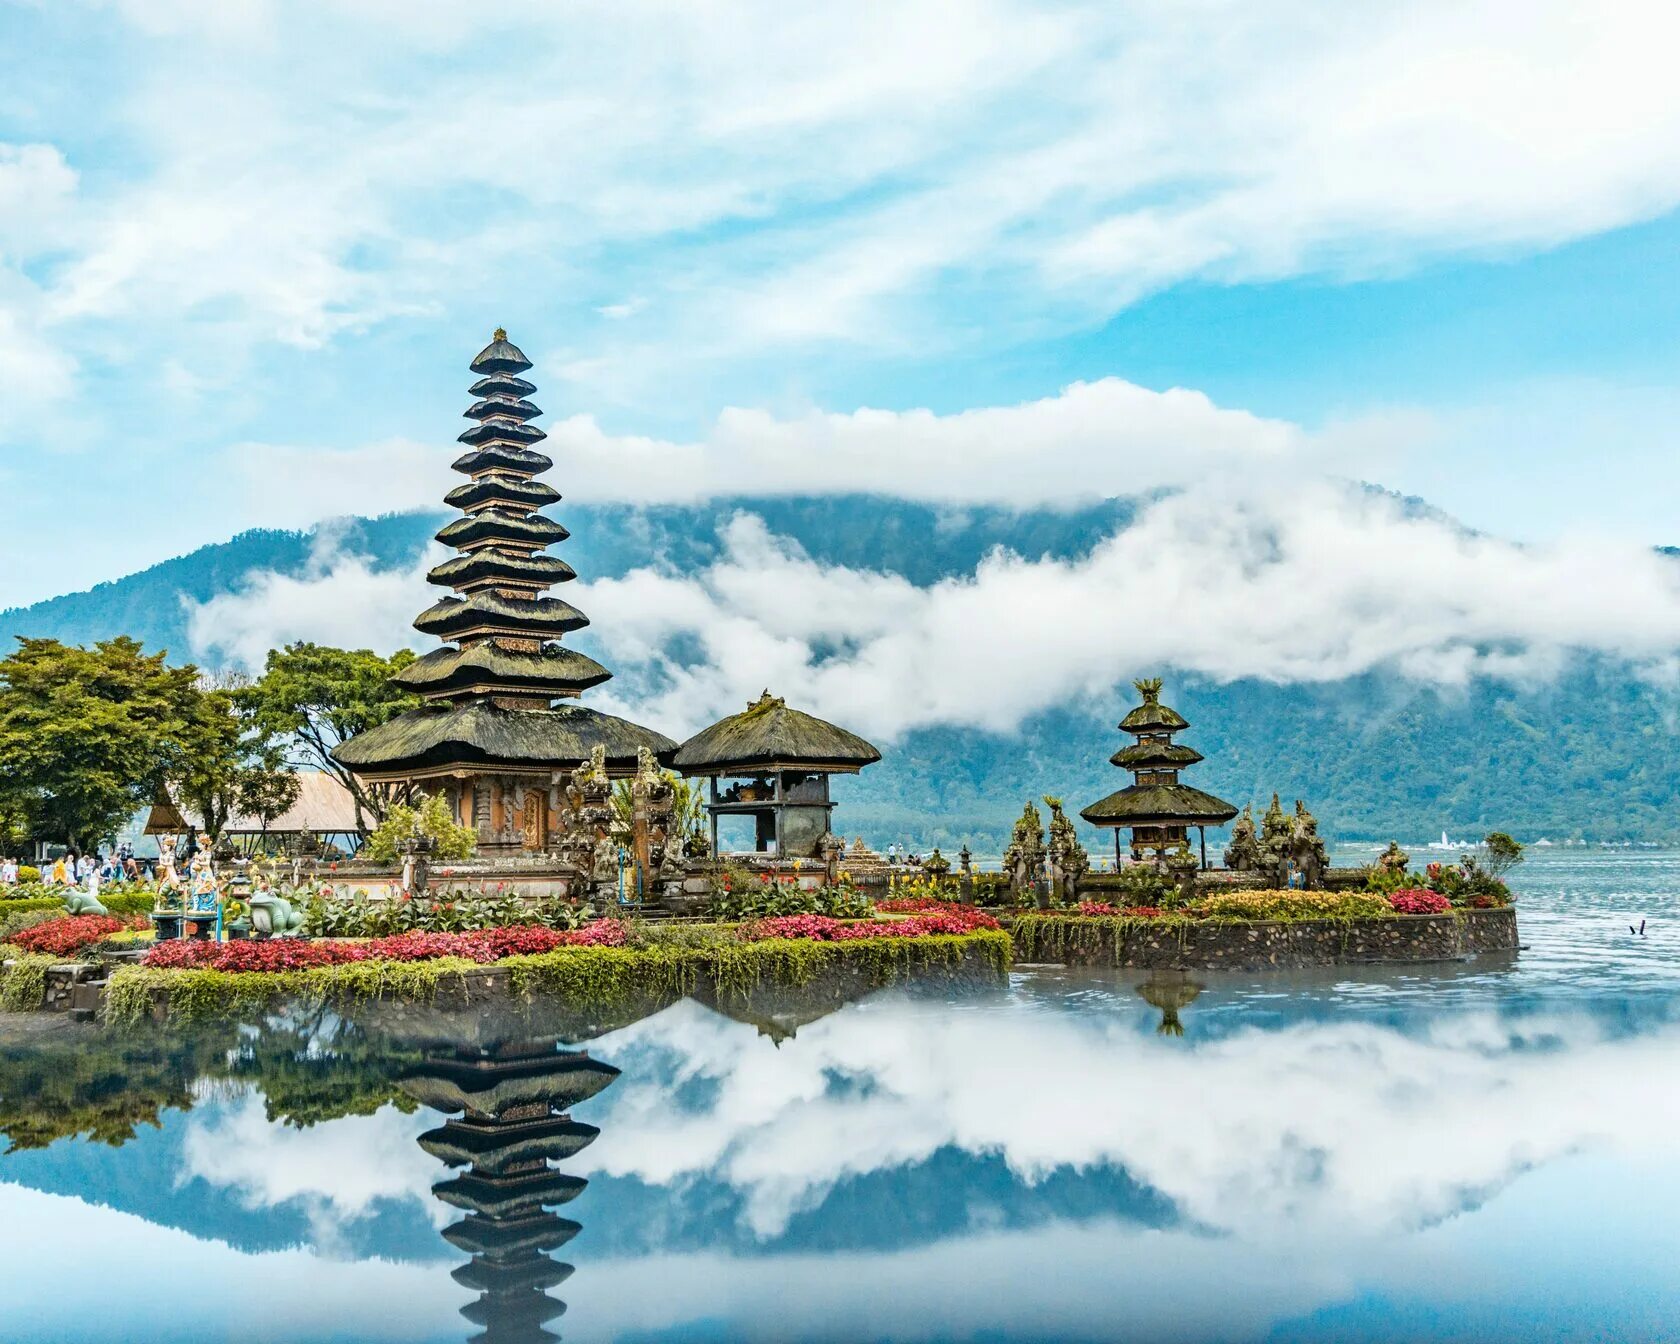 Храм Пура улун дану. Индонезия Бали. Пура Бесаких, Бали, Индонезия. Бали (остров в малайском архипелаге). Площадь бали